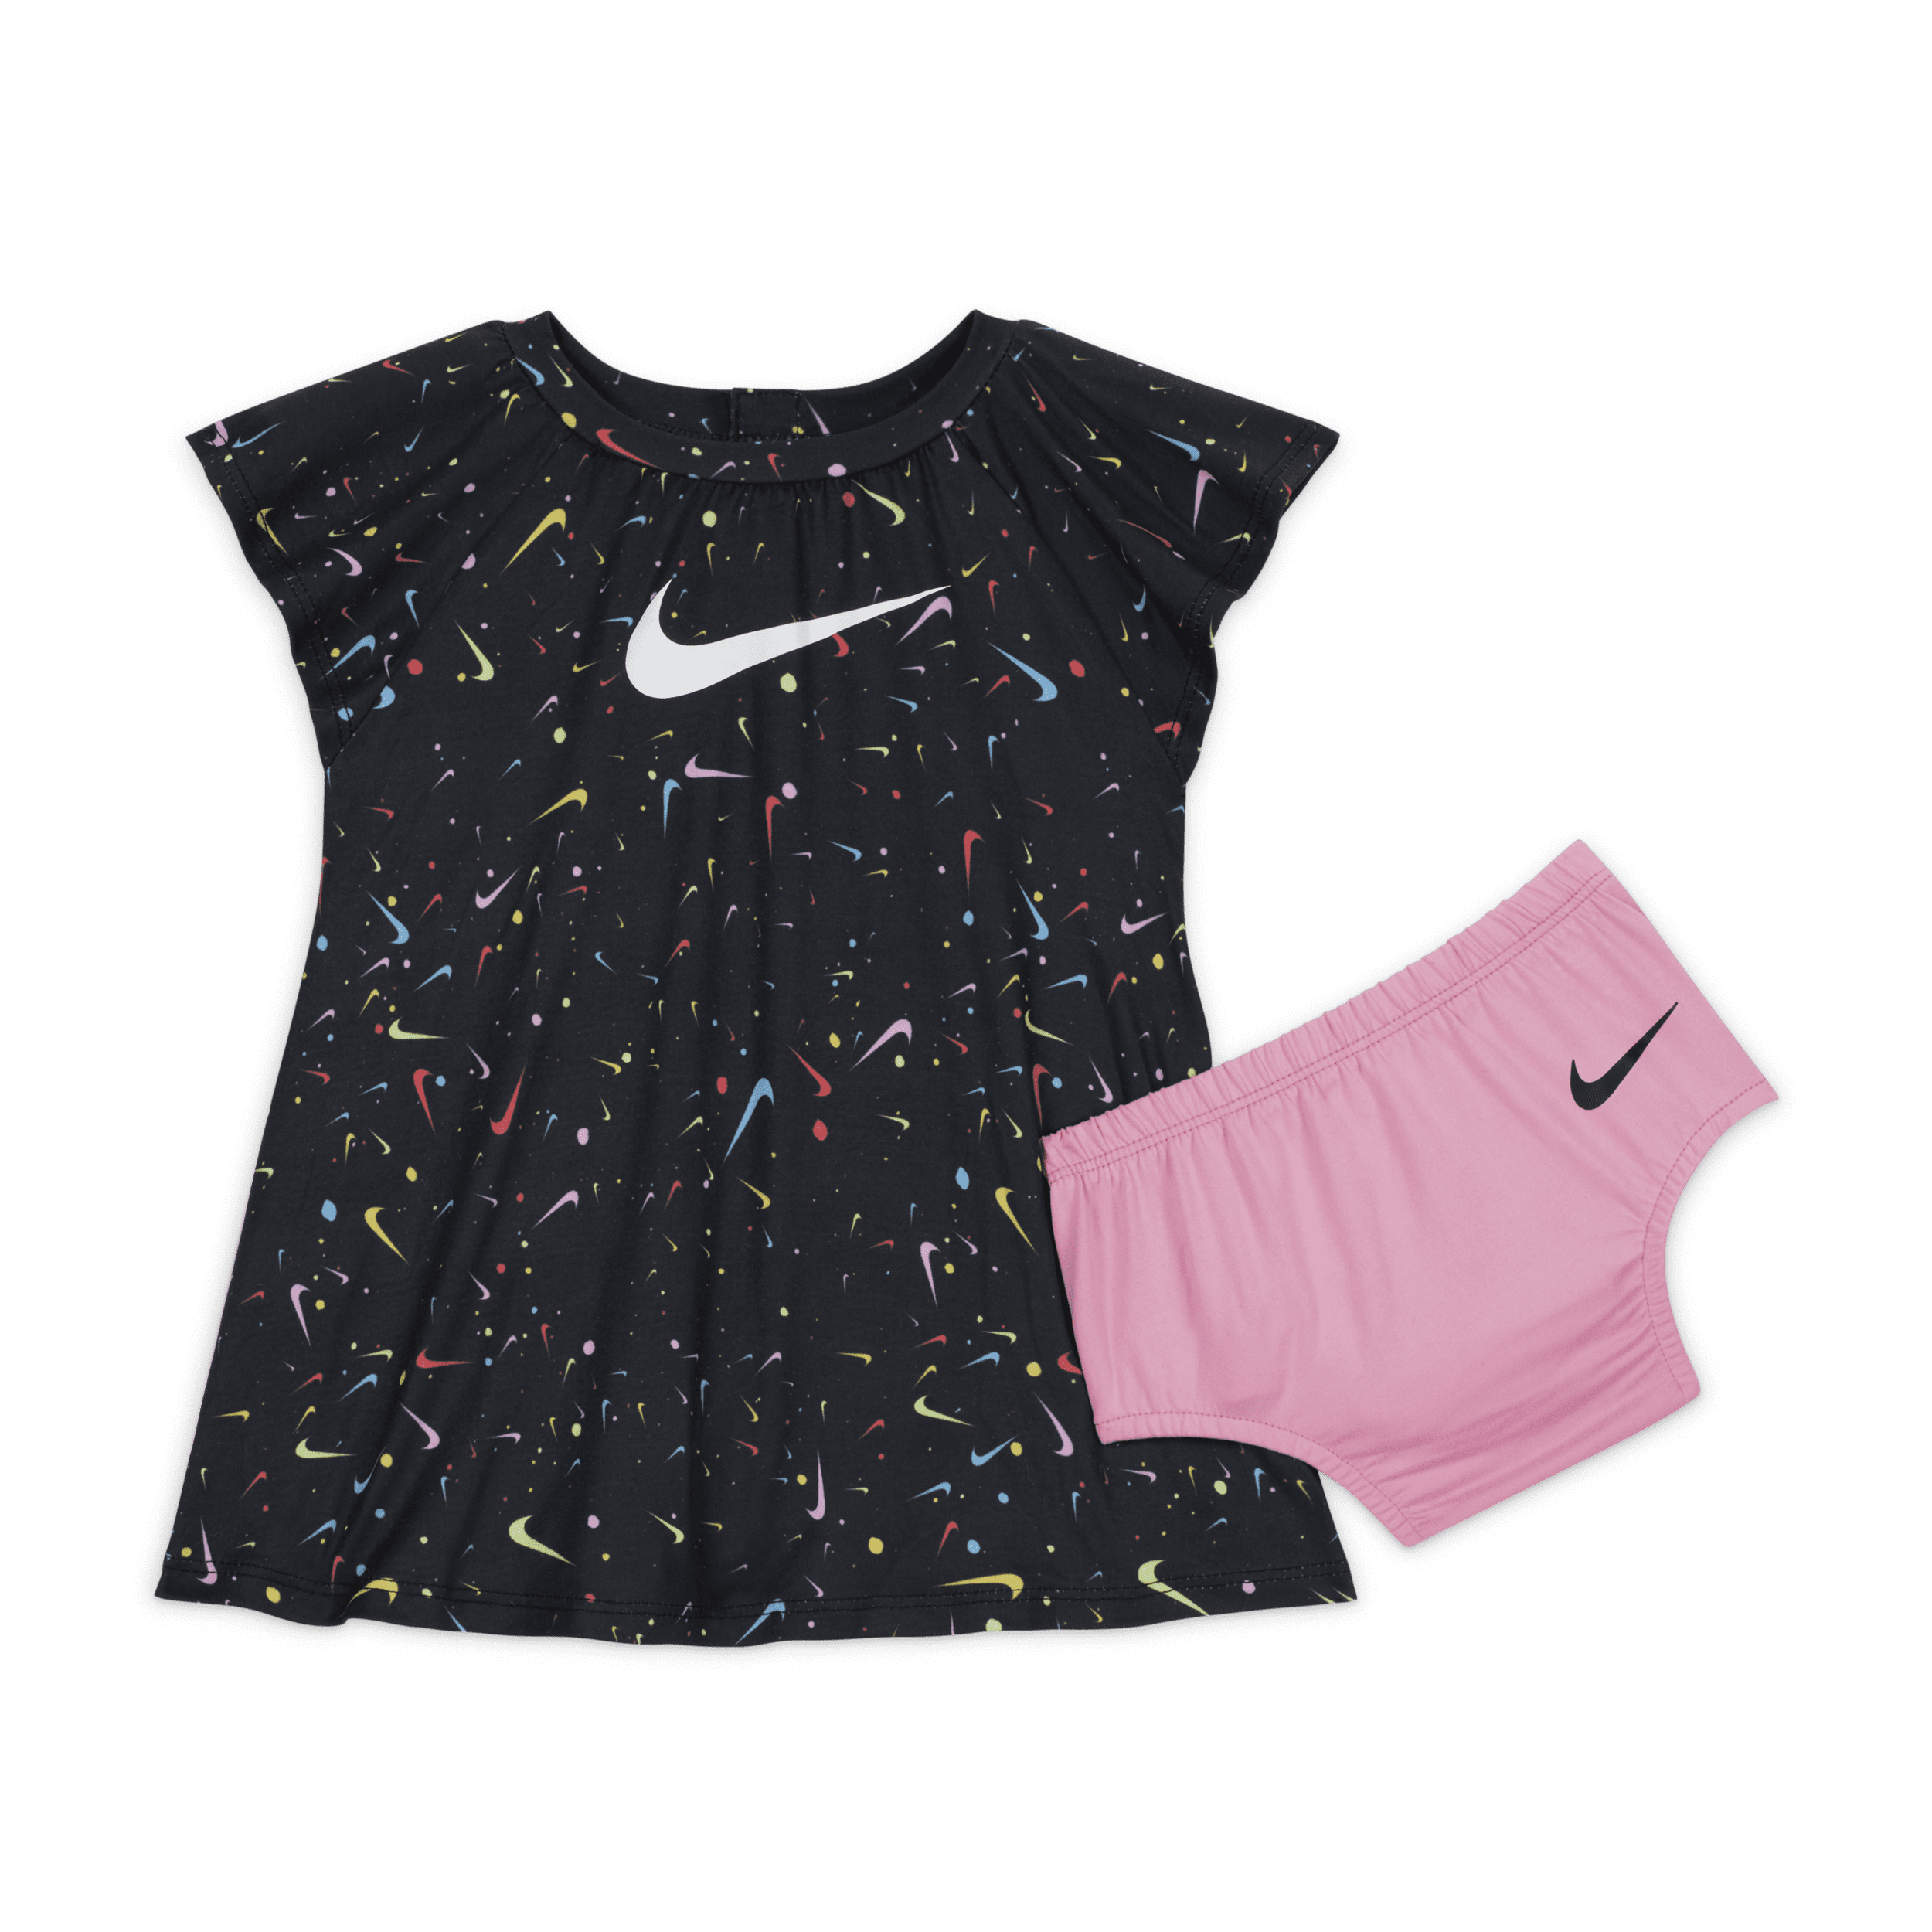 Abito Nike - Neonati (0-9 mesi) - Nero